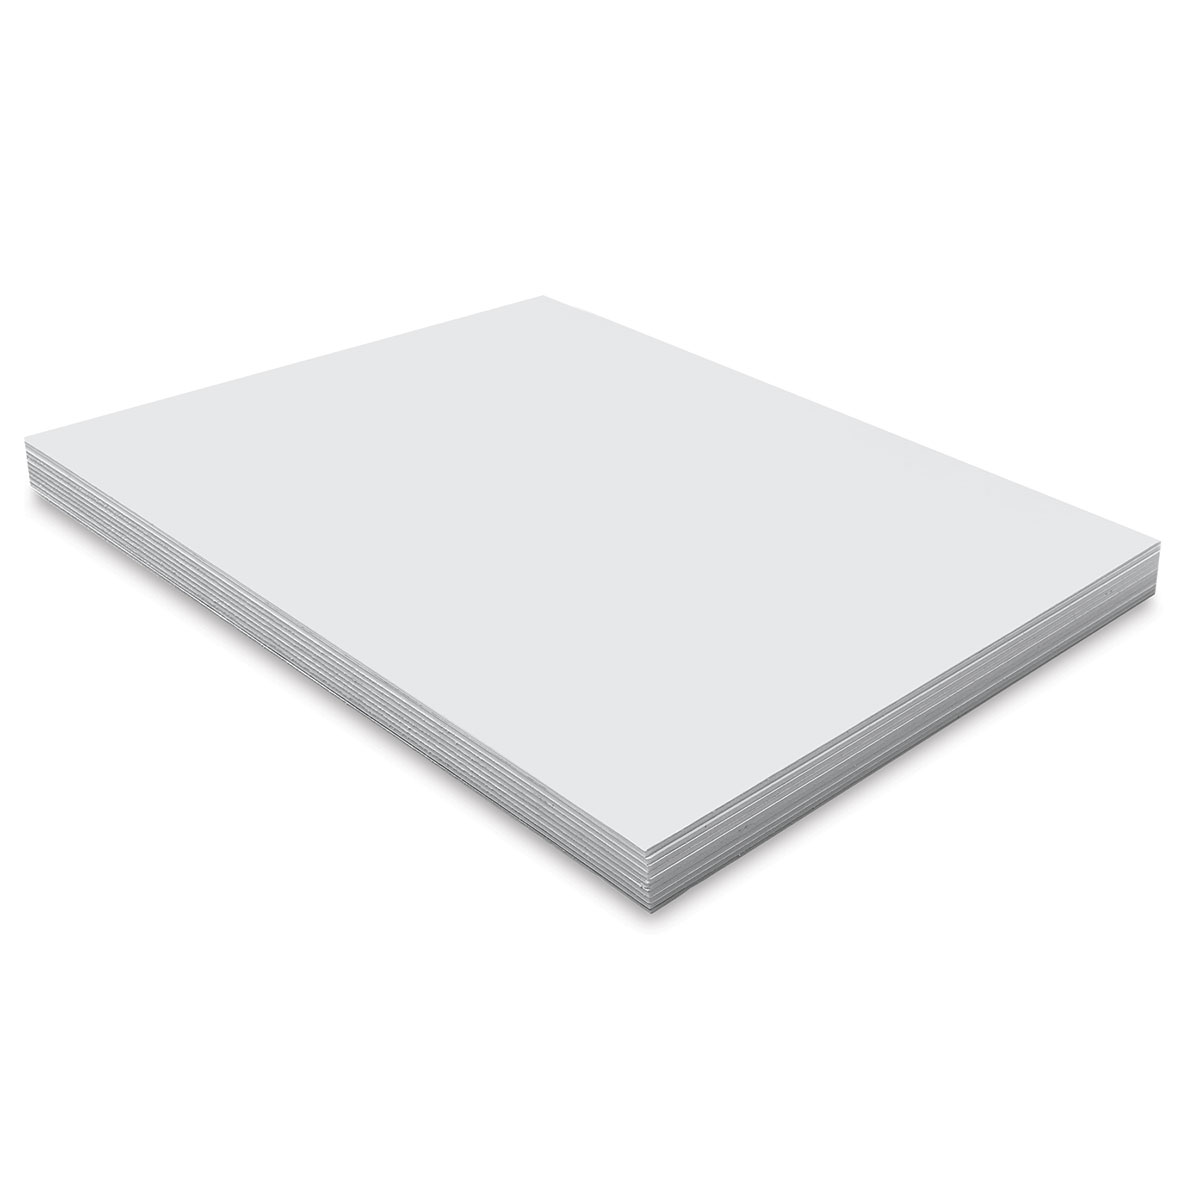 3/16 Black 1 Side Self Adhesive Foam Core Boards :24x36